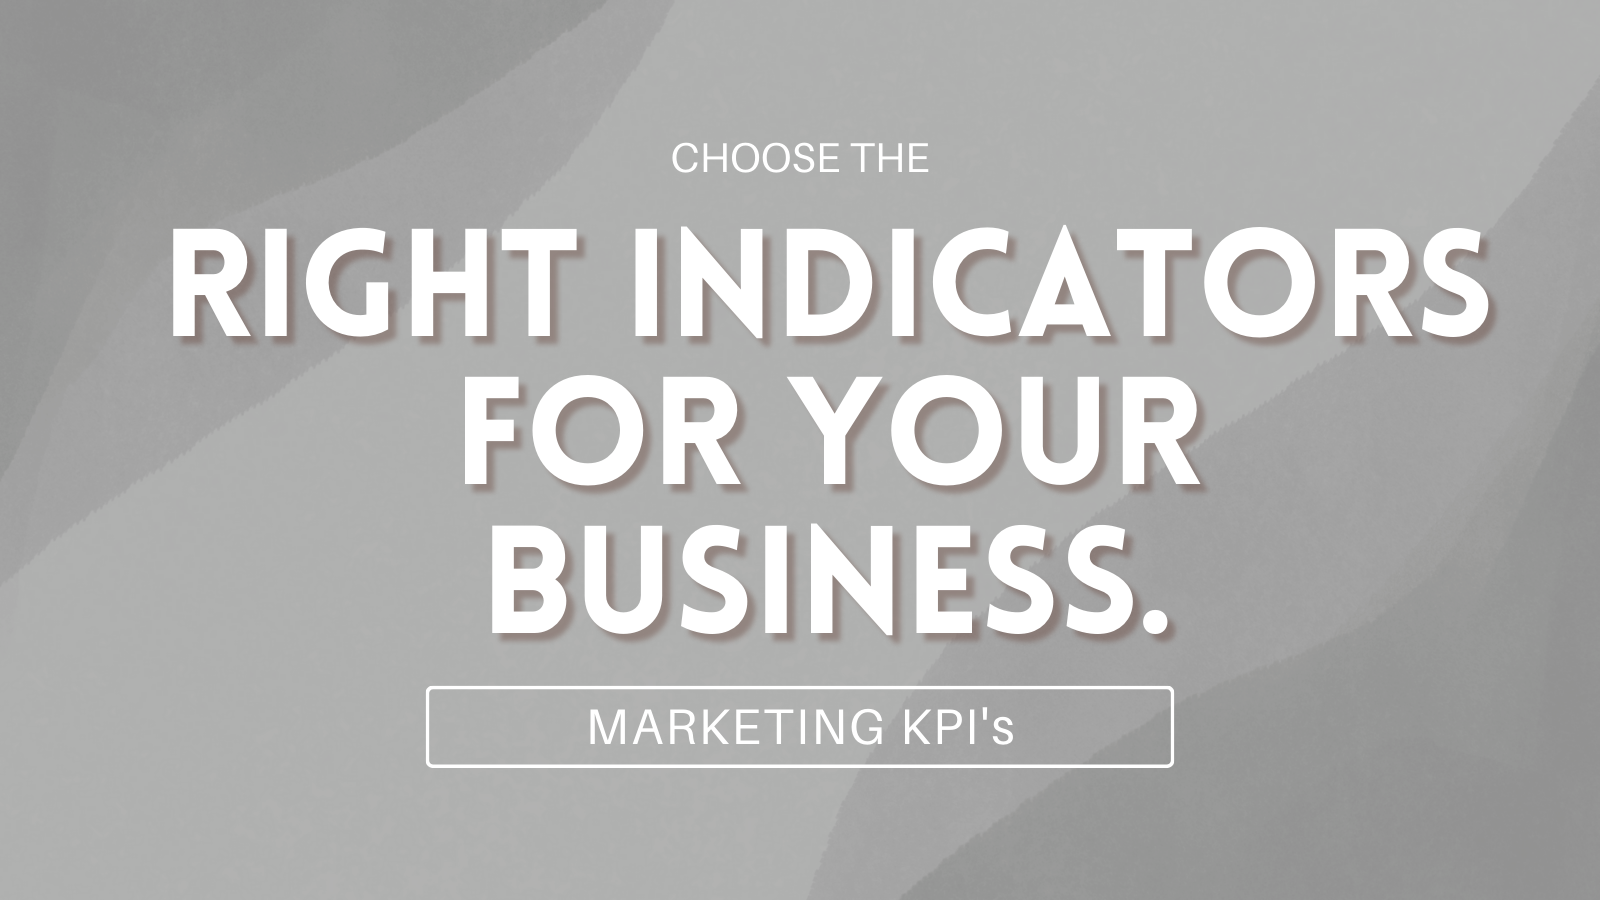 Marketing KPIs